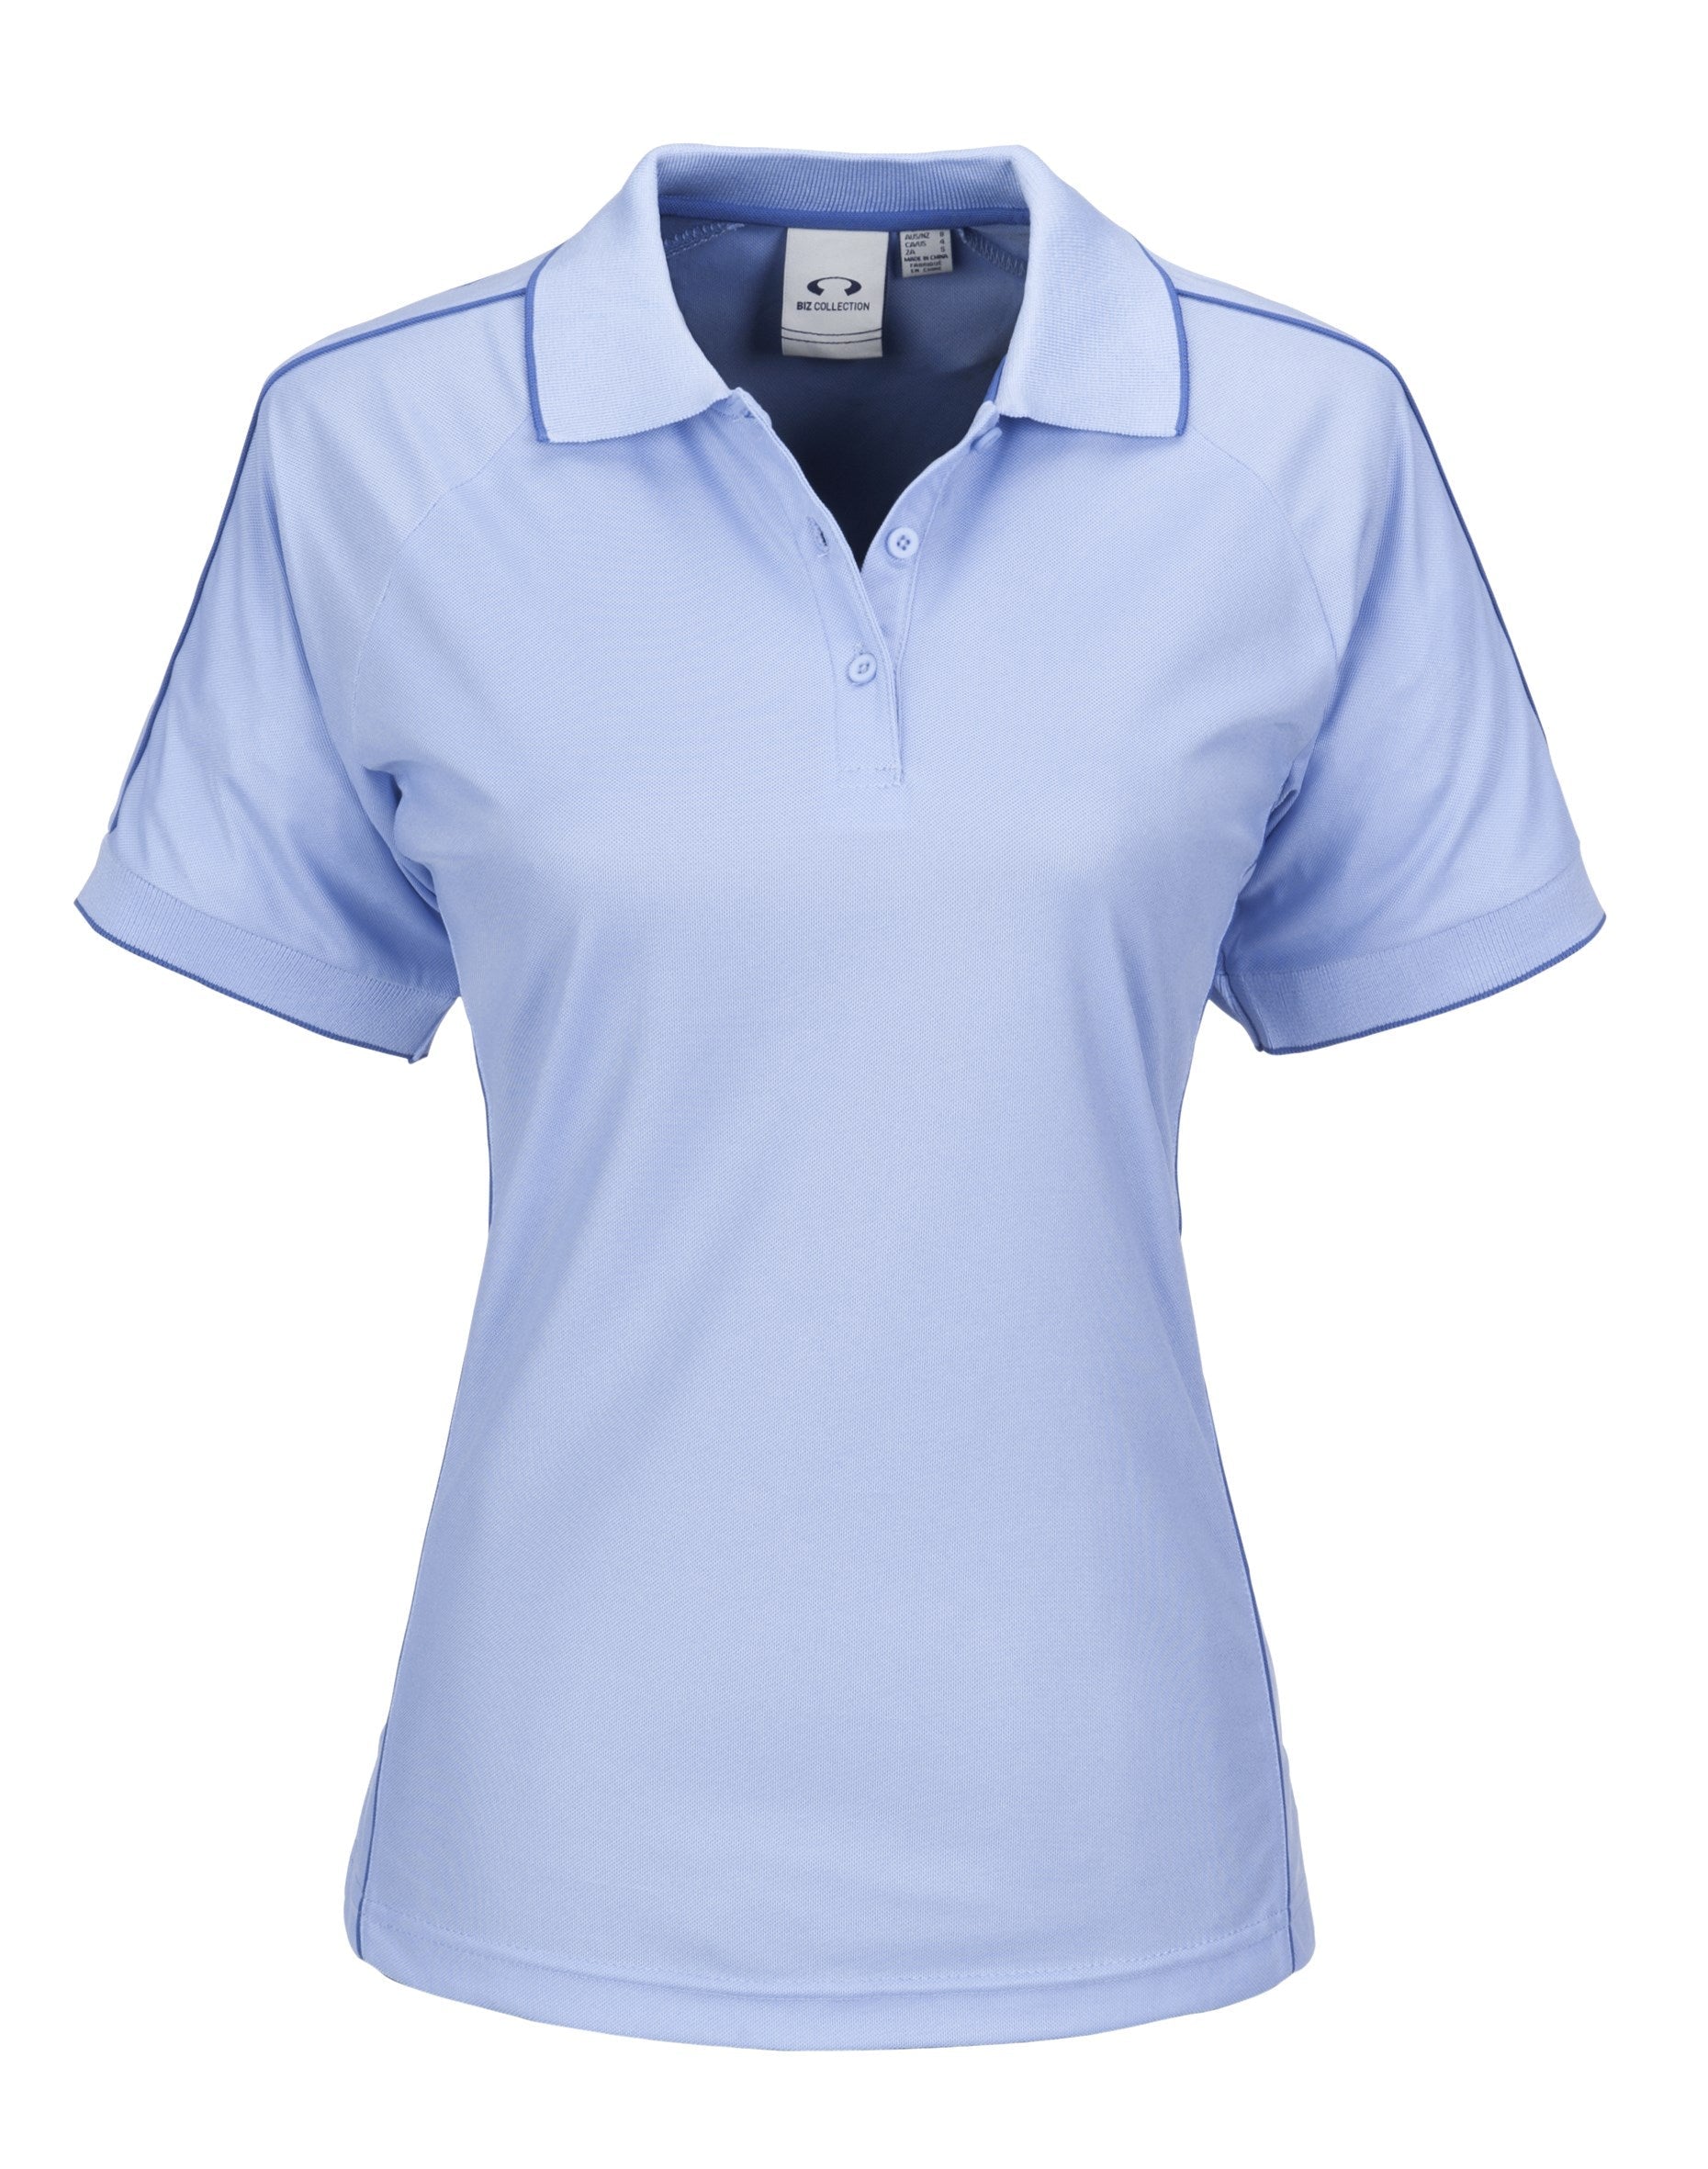 Ladies Resort Golf Shirt - White Only-L-Light Blue-LB